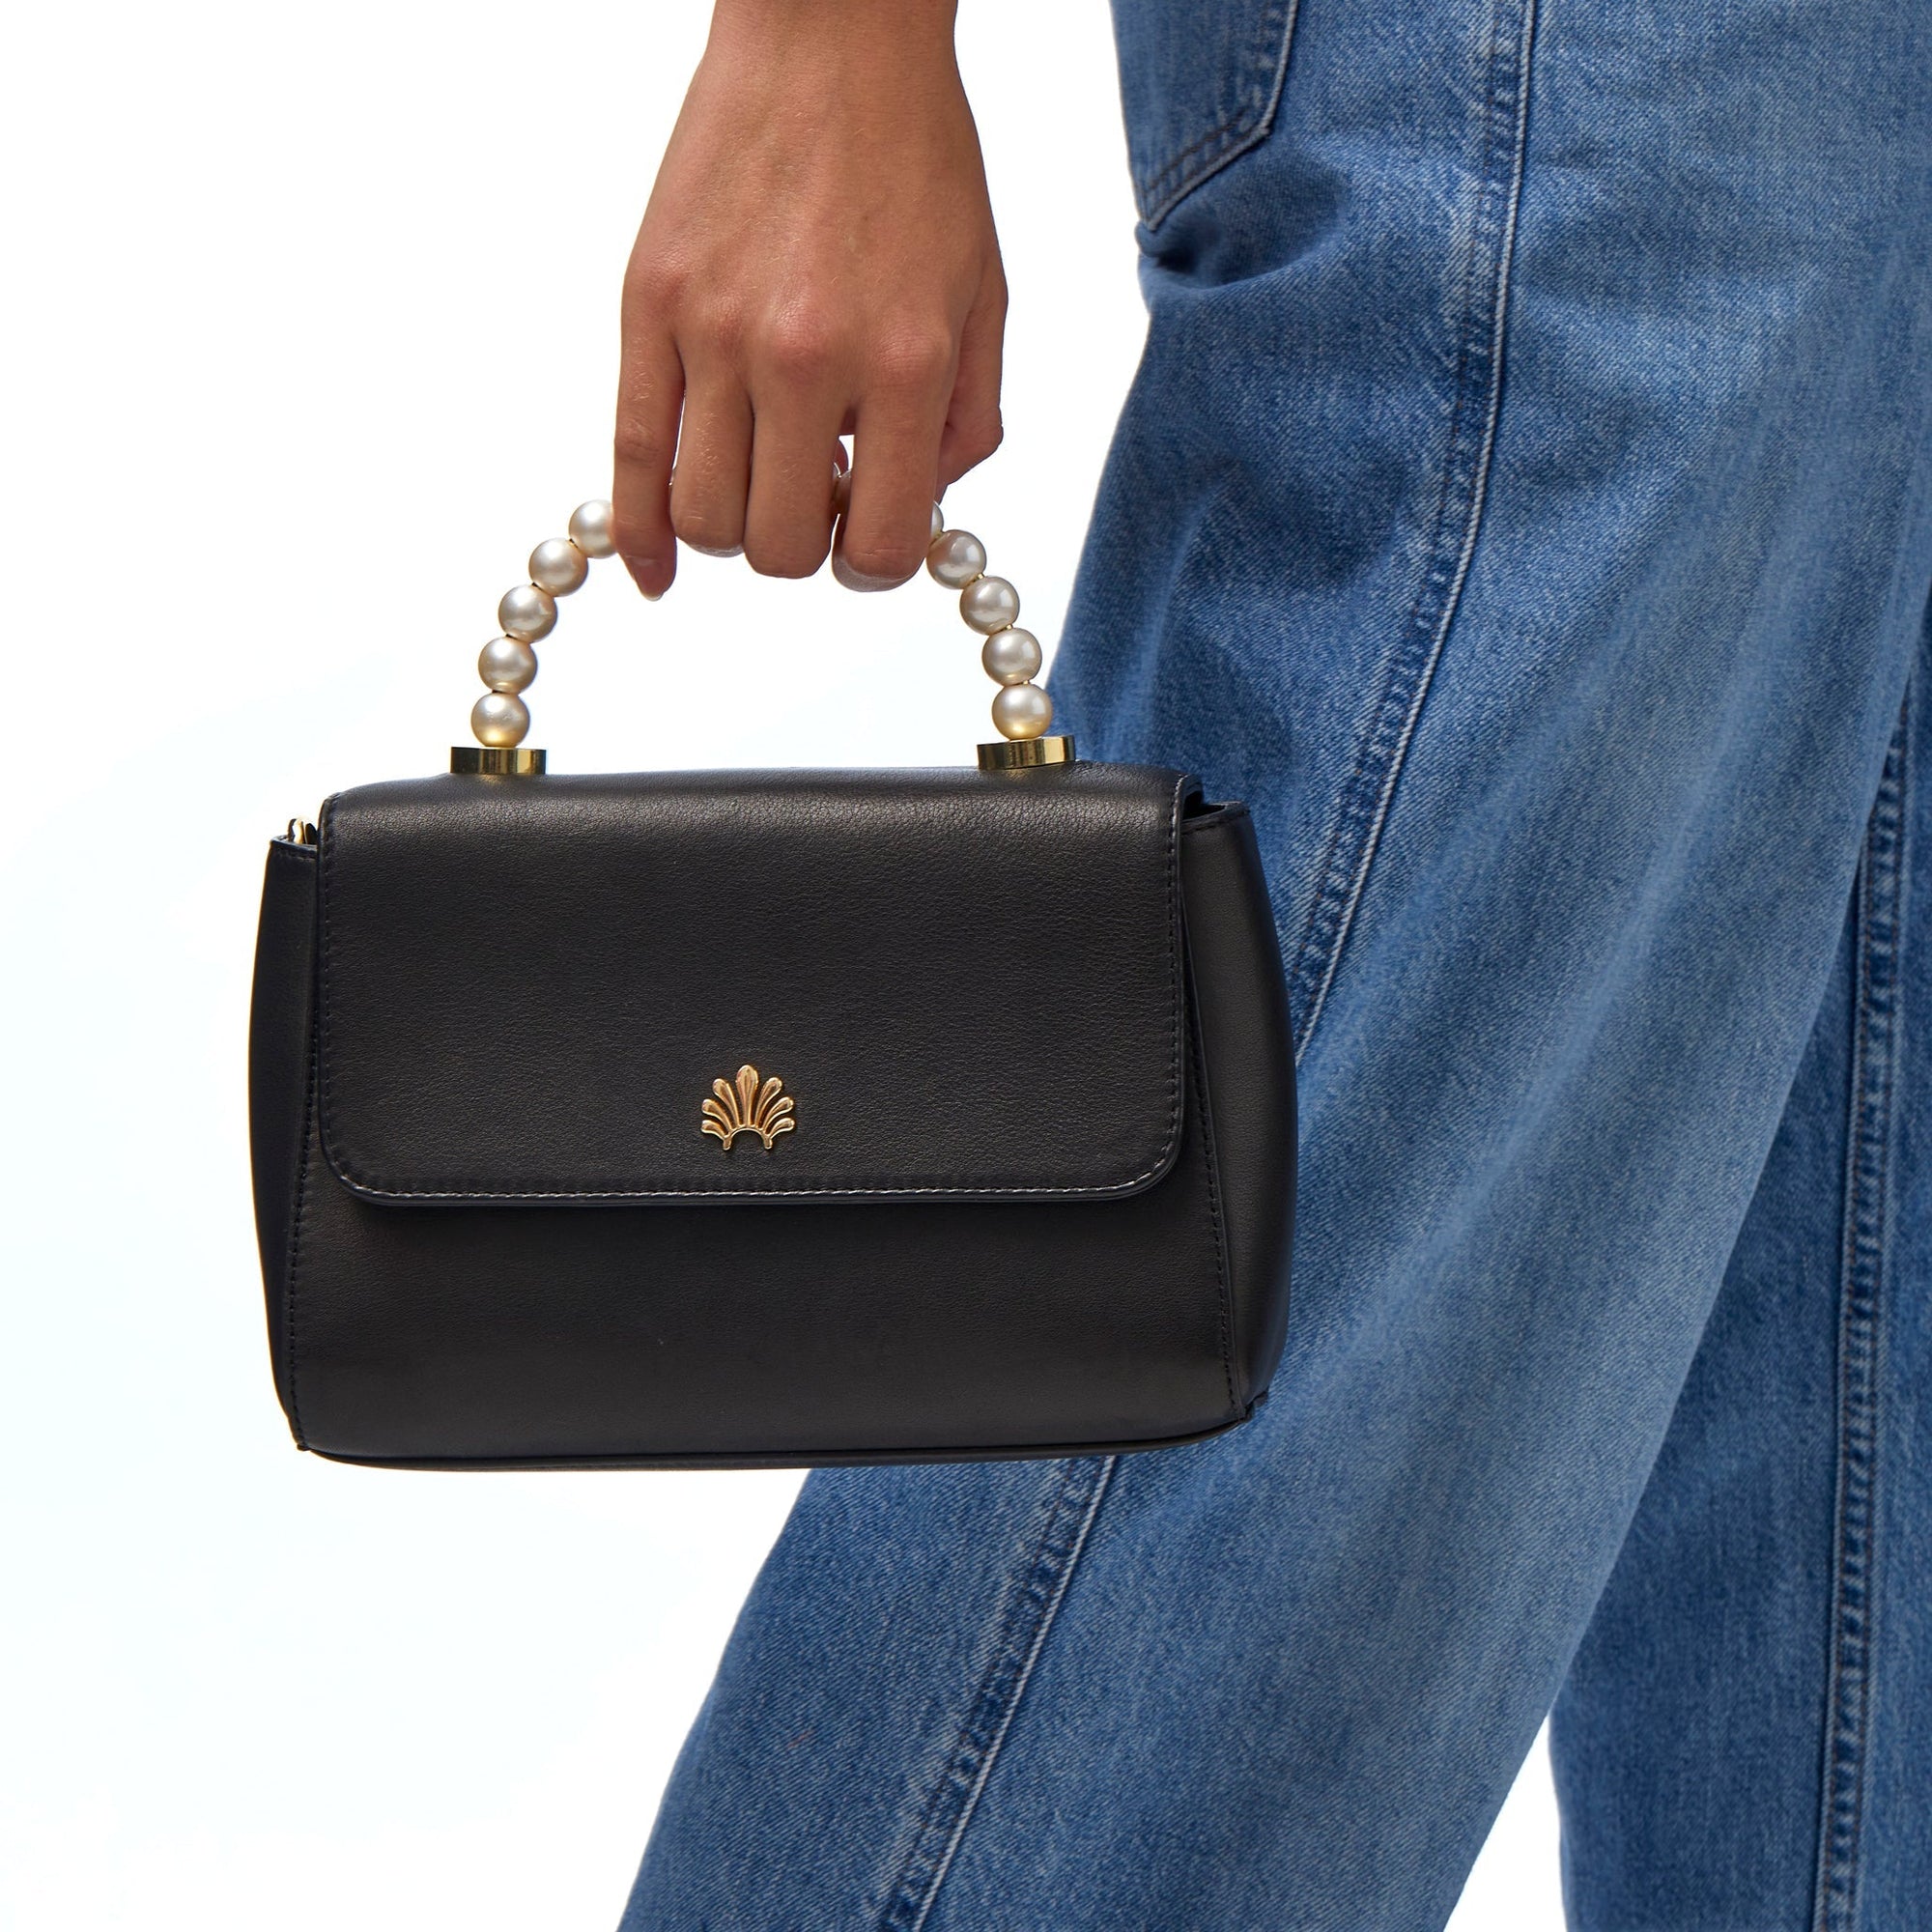 NEW Handbags for Fall - Lele Sadoughi